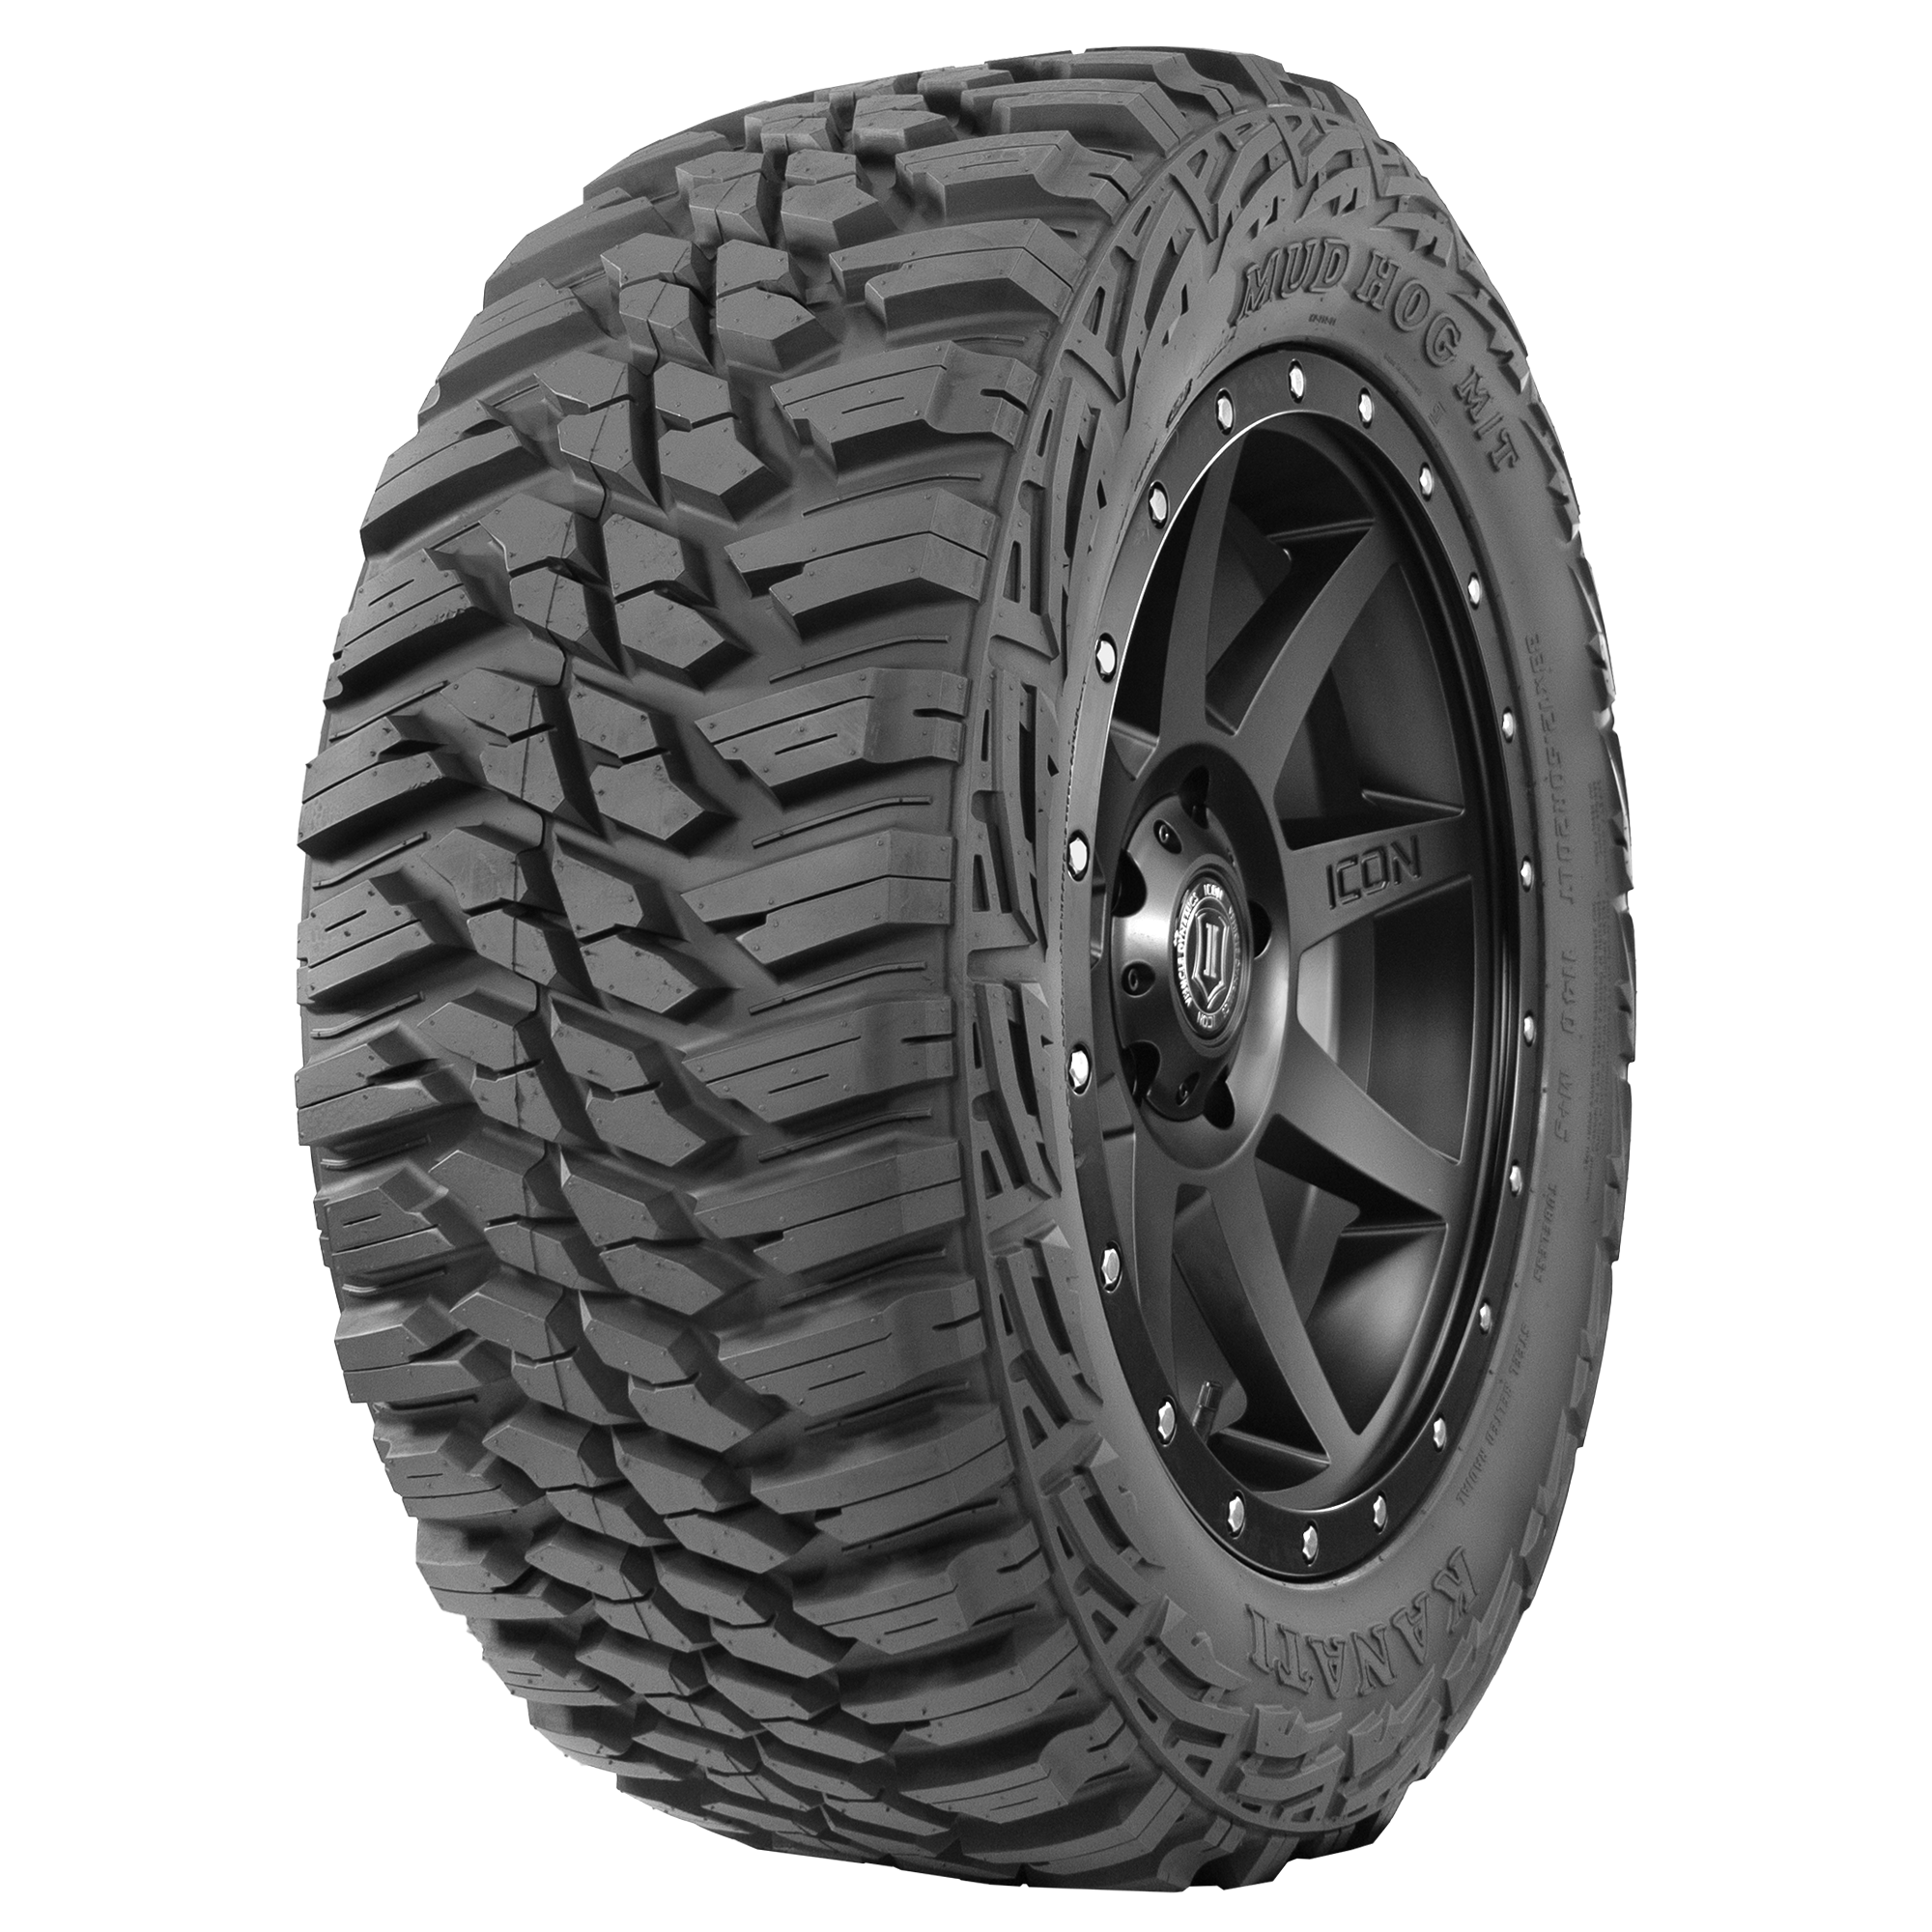 Kanati Mud Hog M/T LT275/60R20 123Q Mud Terrain Tire (Tire Only) - image 1 of 5